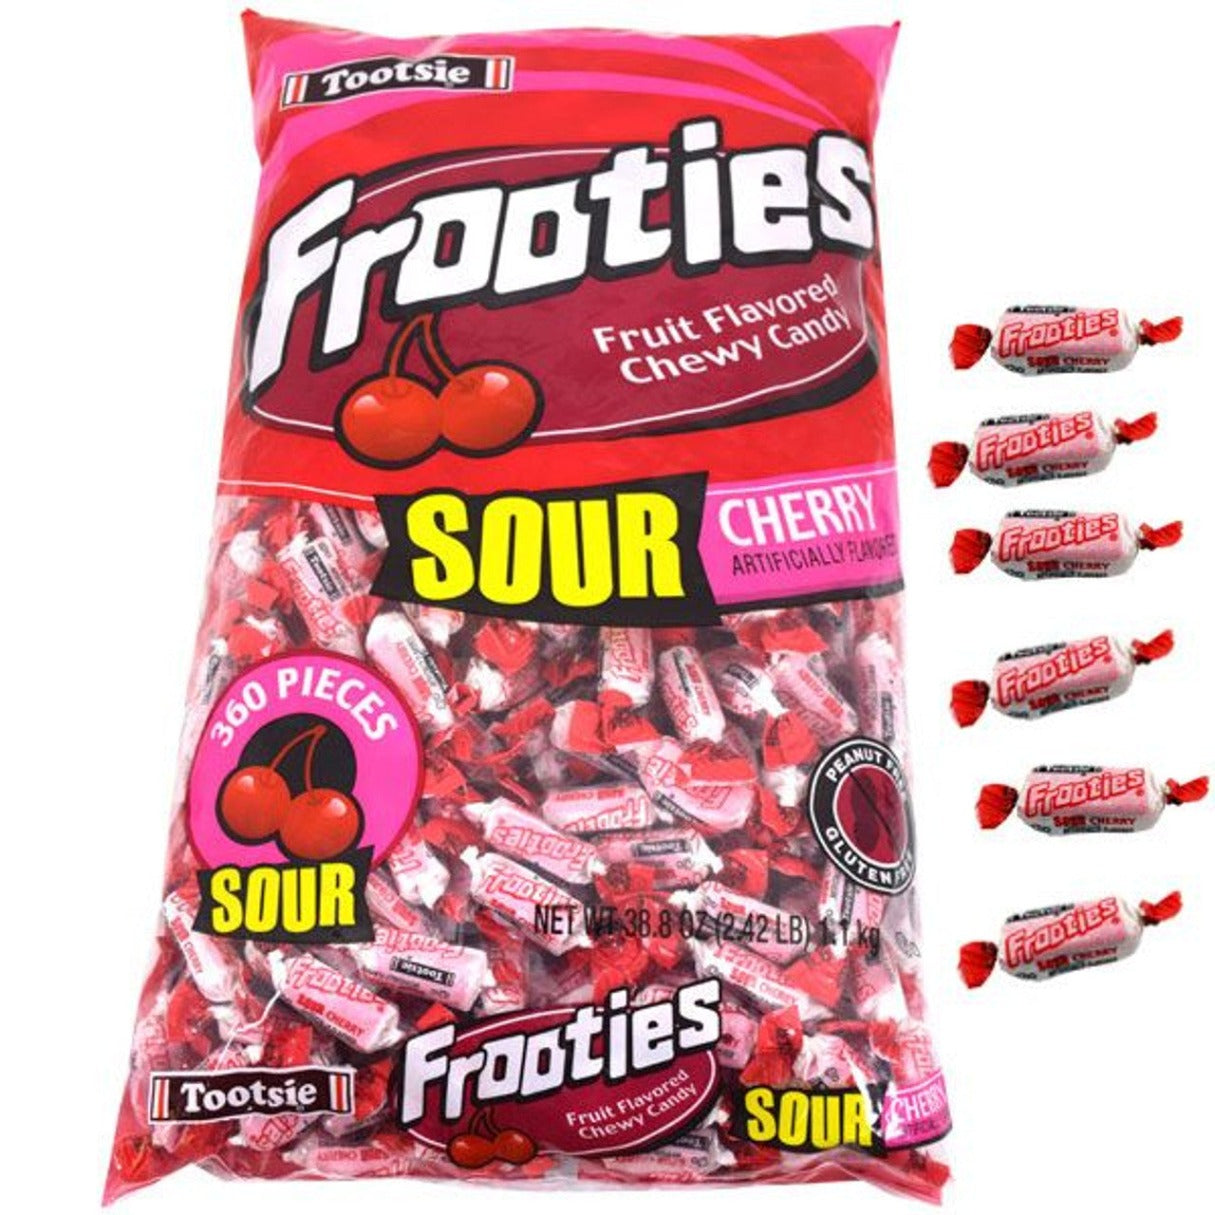 Tootsie Sour Cherry Frooties Bag 38.8oz - 1ct